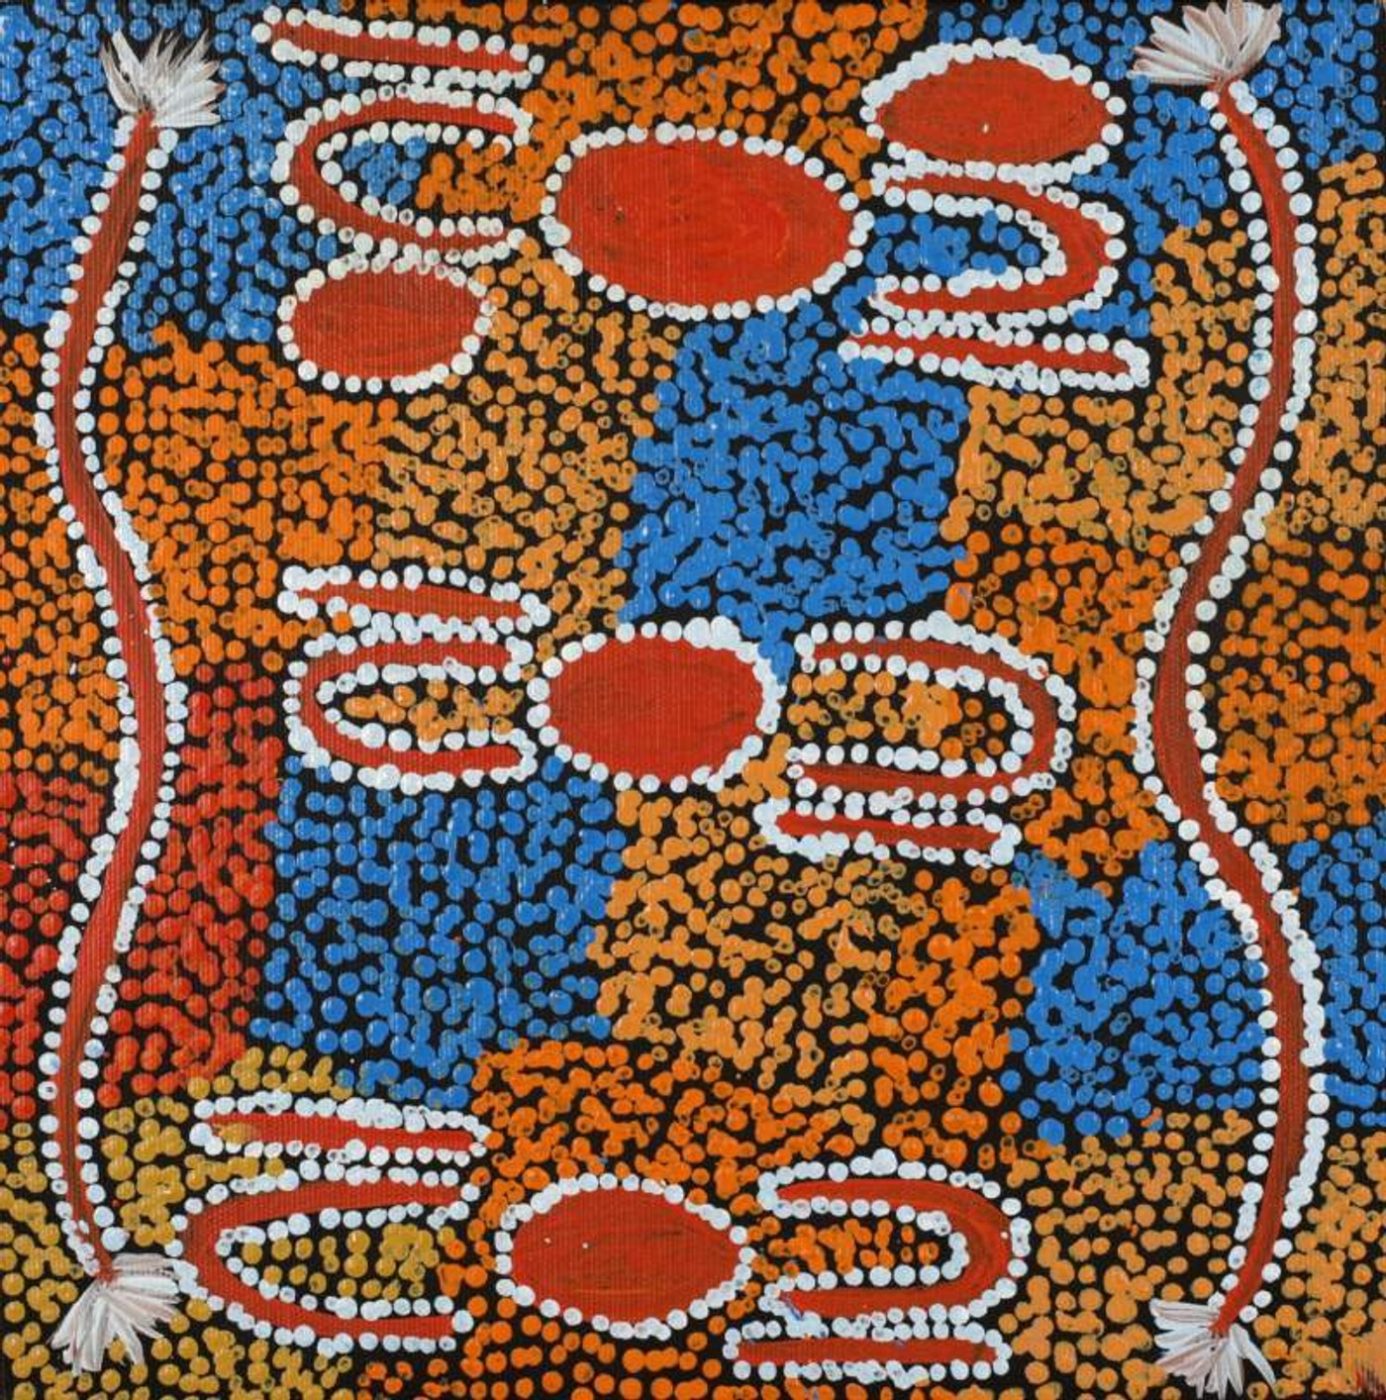 Ngarlajiyi Jukurrpa (Bush Carrot Dreaming) by Audrey Nungarrayi Brown